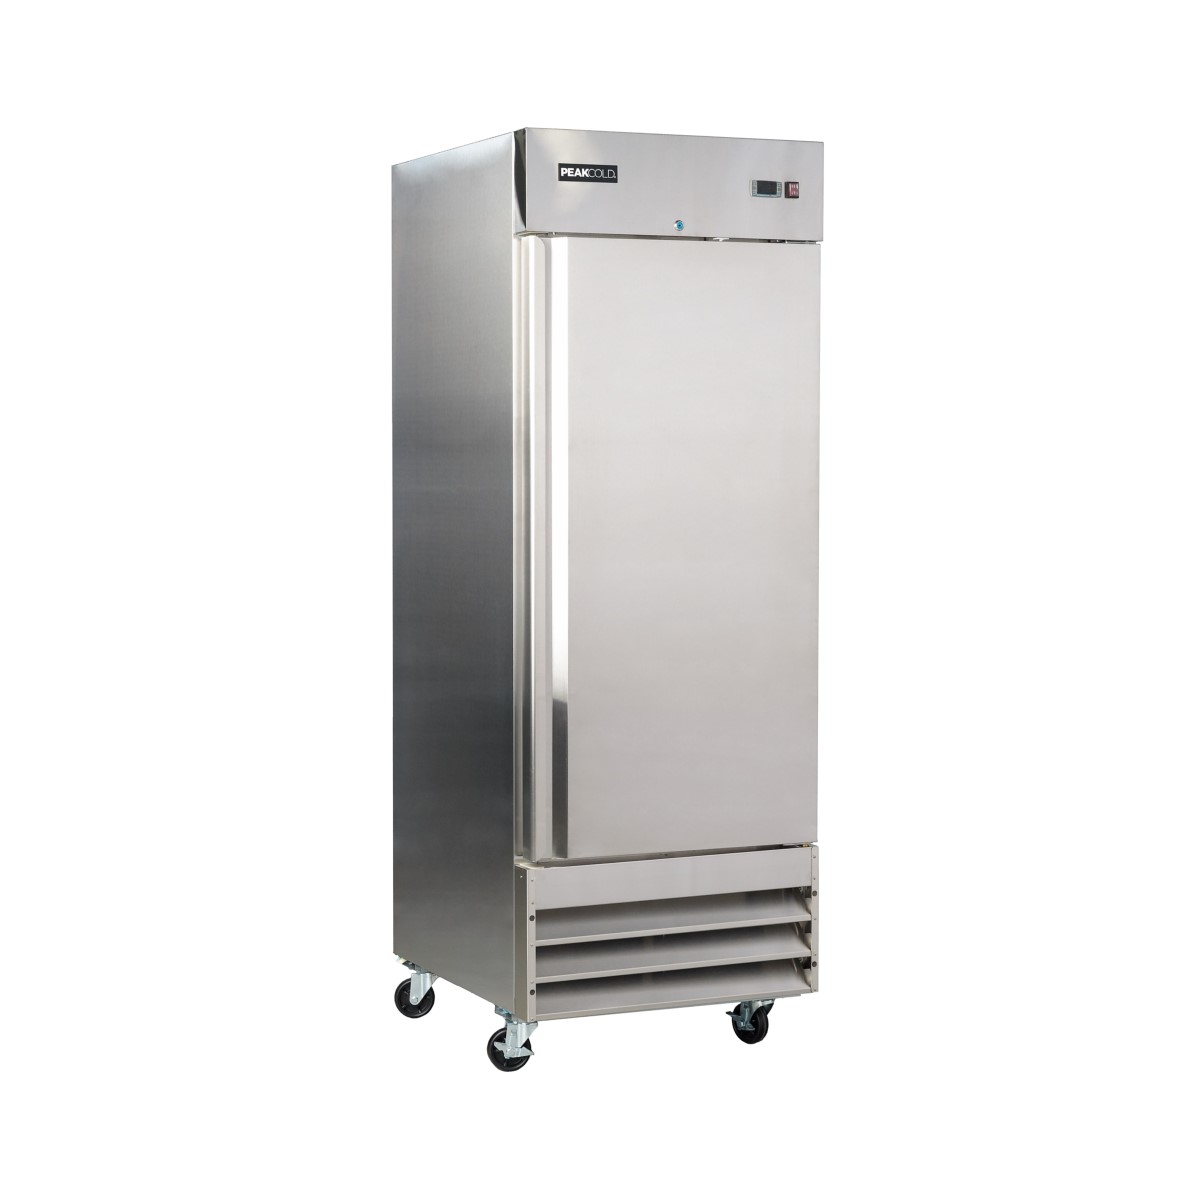 PEAKCOLD Single Door Commercial Refrigerator IM23R 